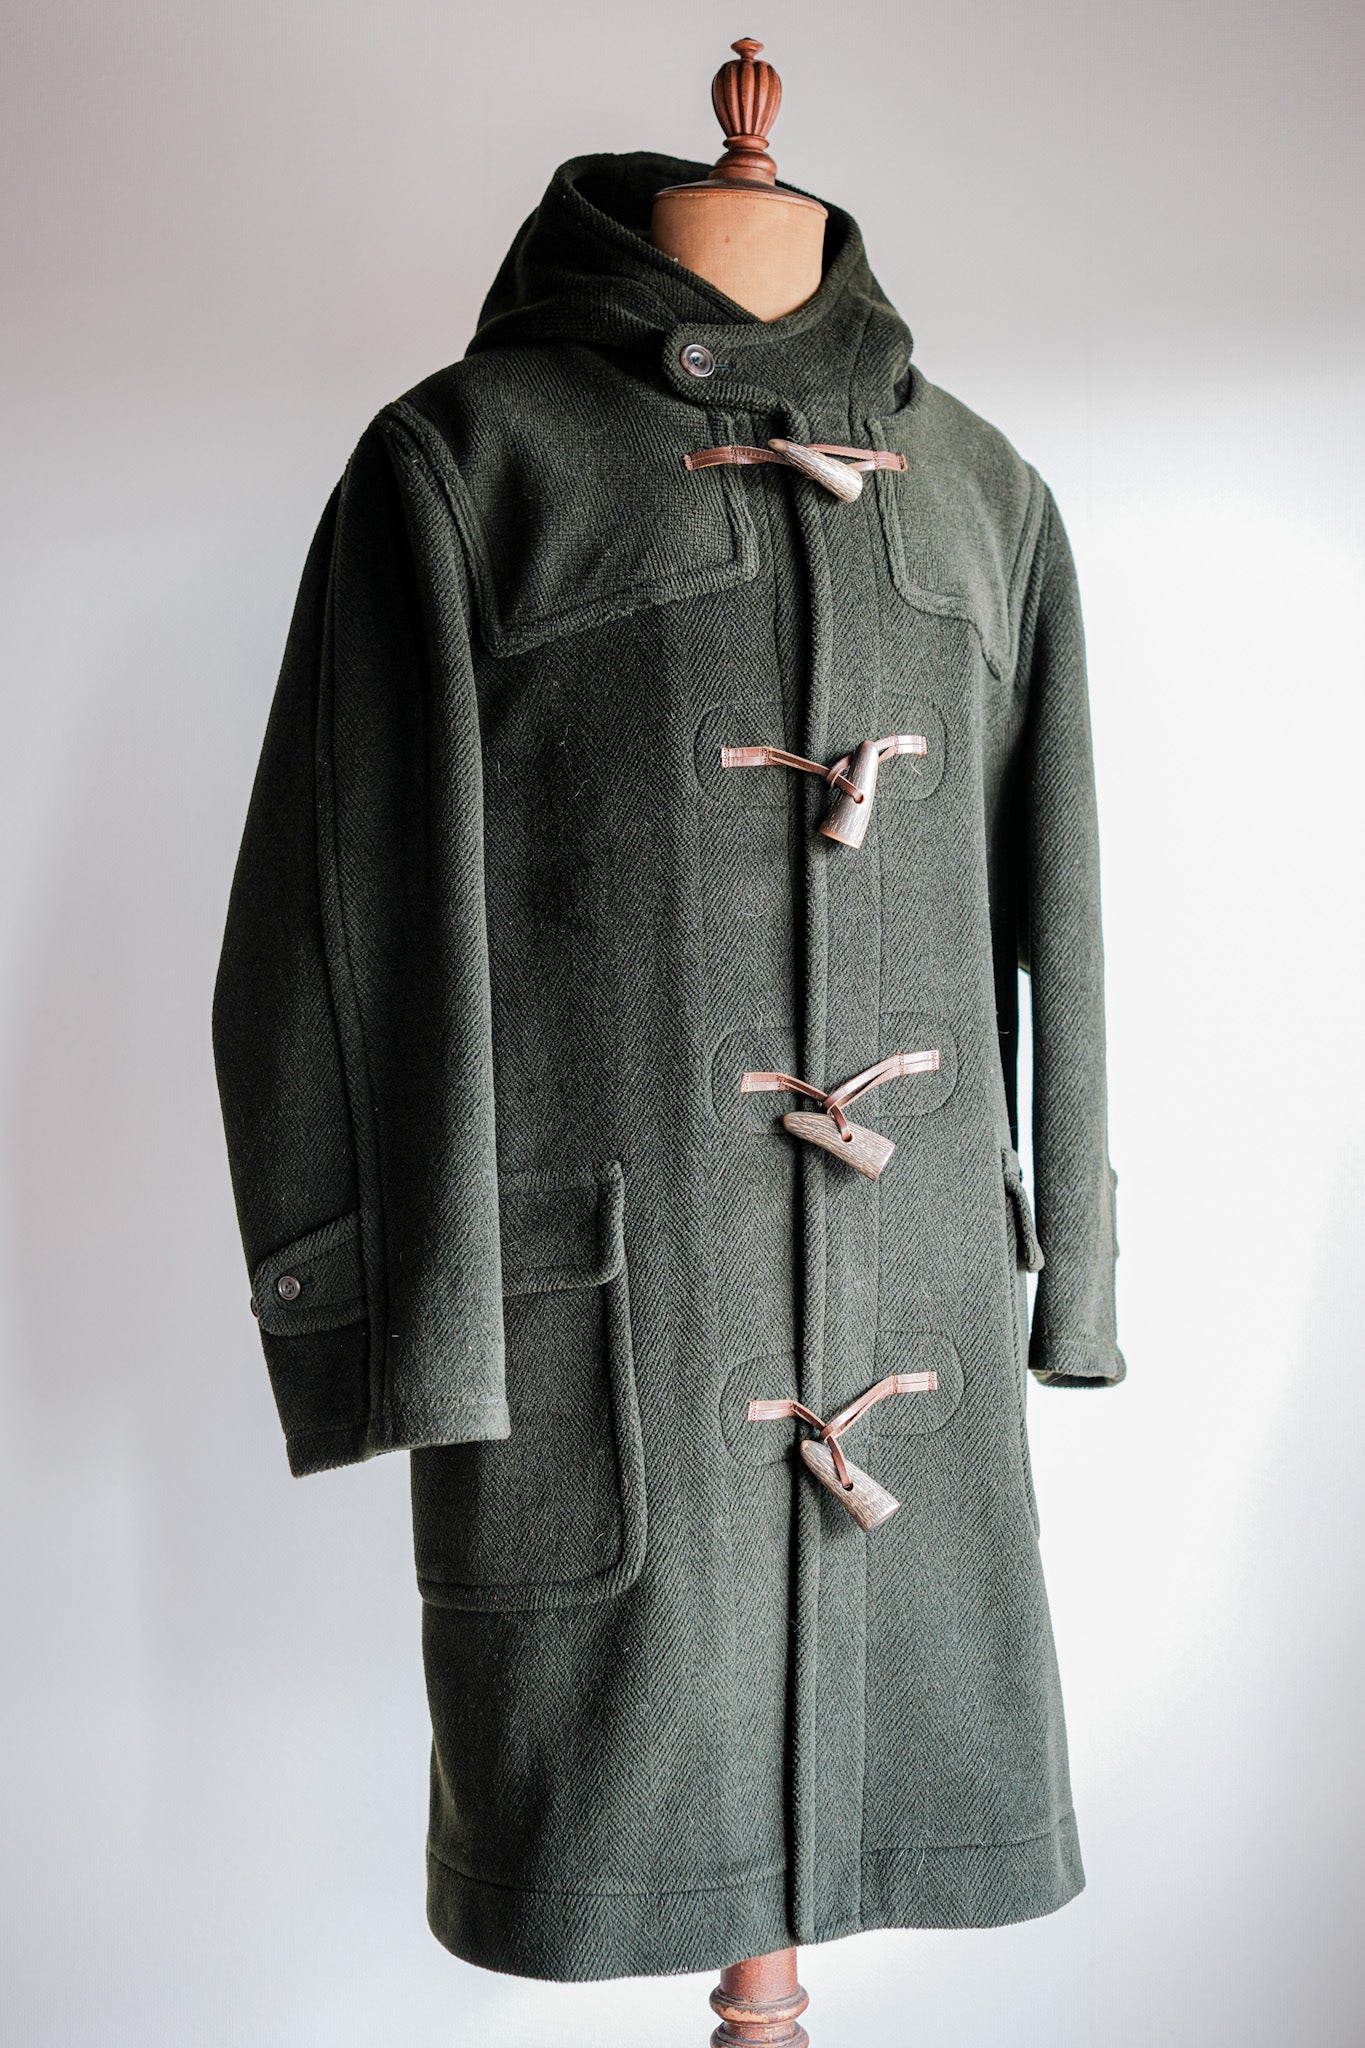 [~ 90's] Old Invertere HBT Wool Duffle Coat "Moorbrook" "Davide Cenci Remarque séparée"